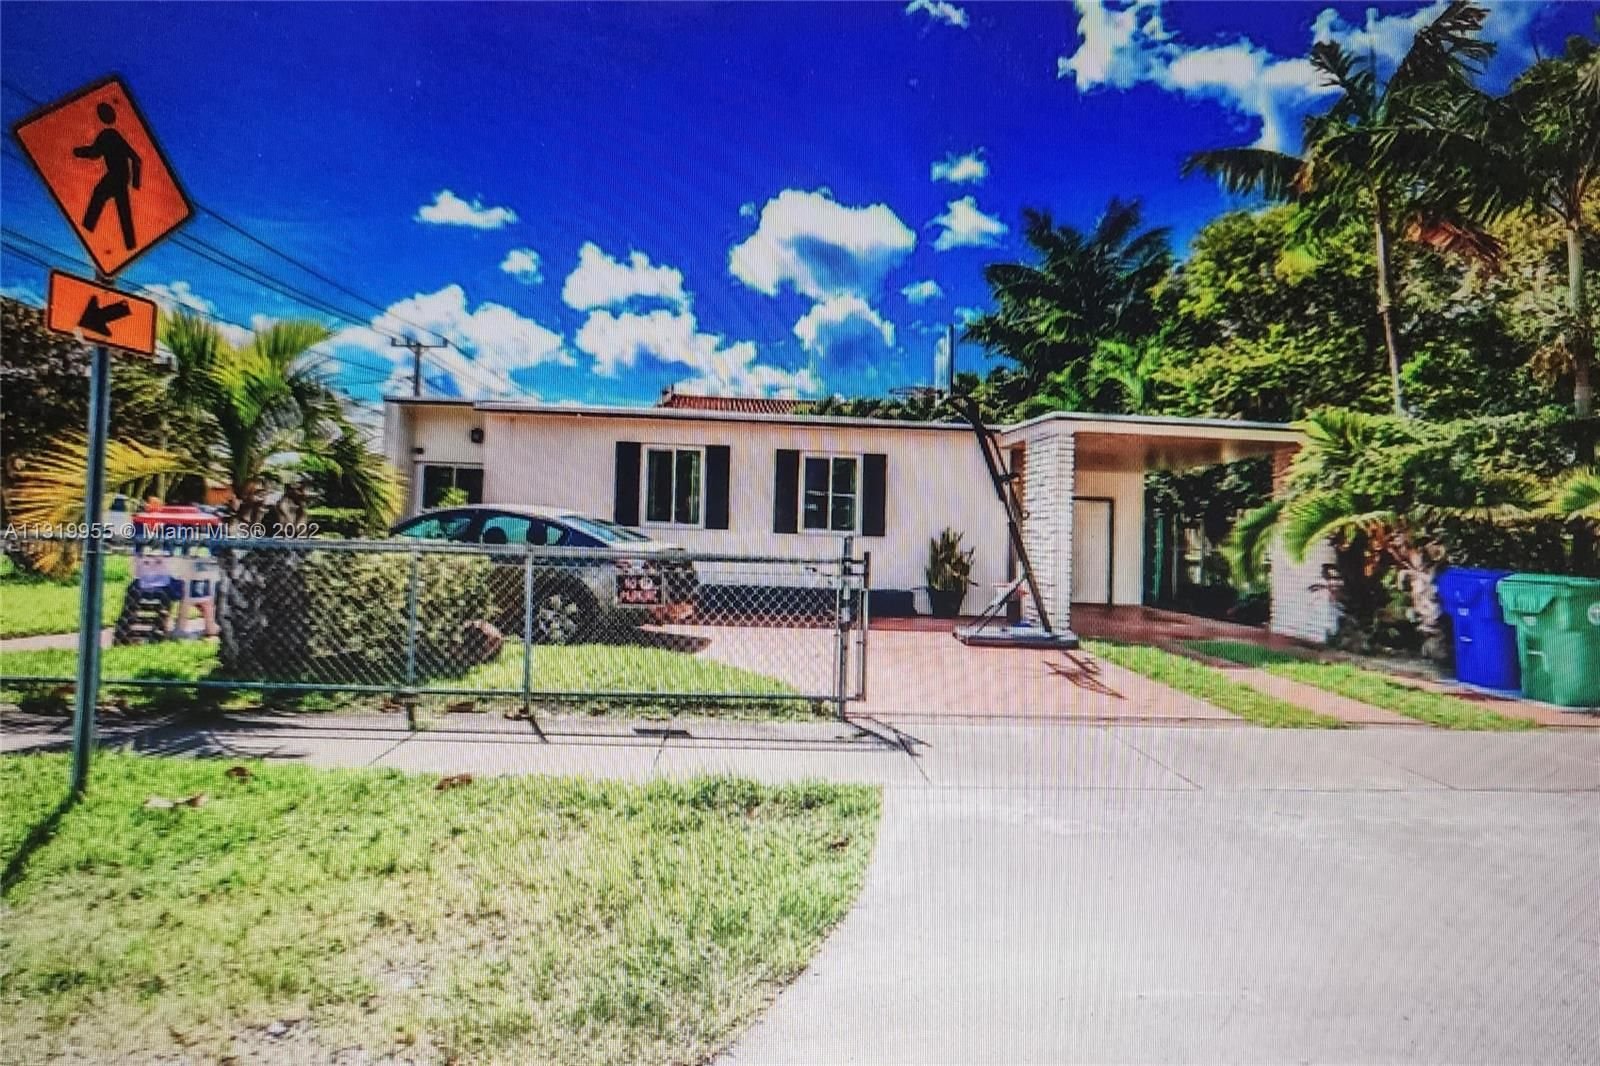 Real estate property located at 3101 18th St, Miami-Dade County, Miami, FL